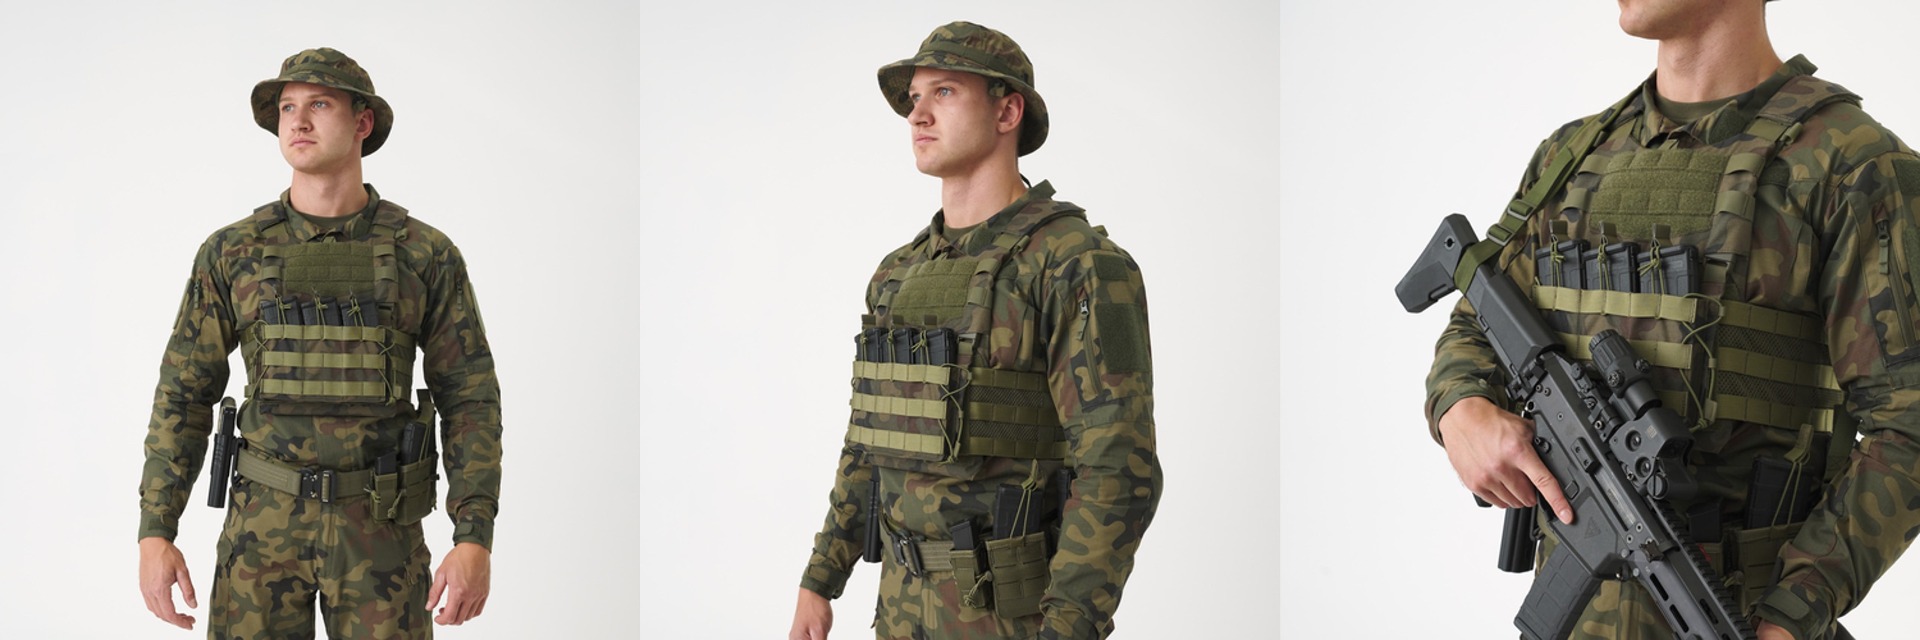 Kupite Helikon Guardian Military Set Modular Tactical Vest v Multicamu za balistične plošče velikosti M (320 x 245 mm) na opremljen.si. Vrhunska vojaška oprema za maksimalno varnost.